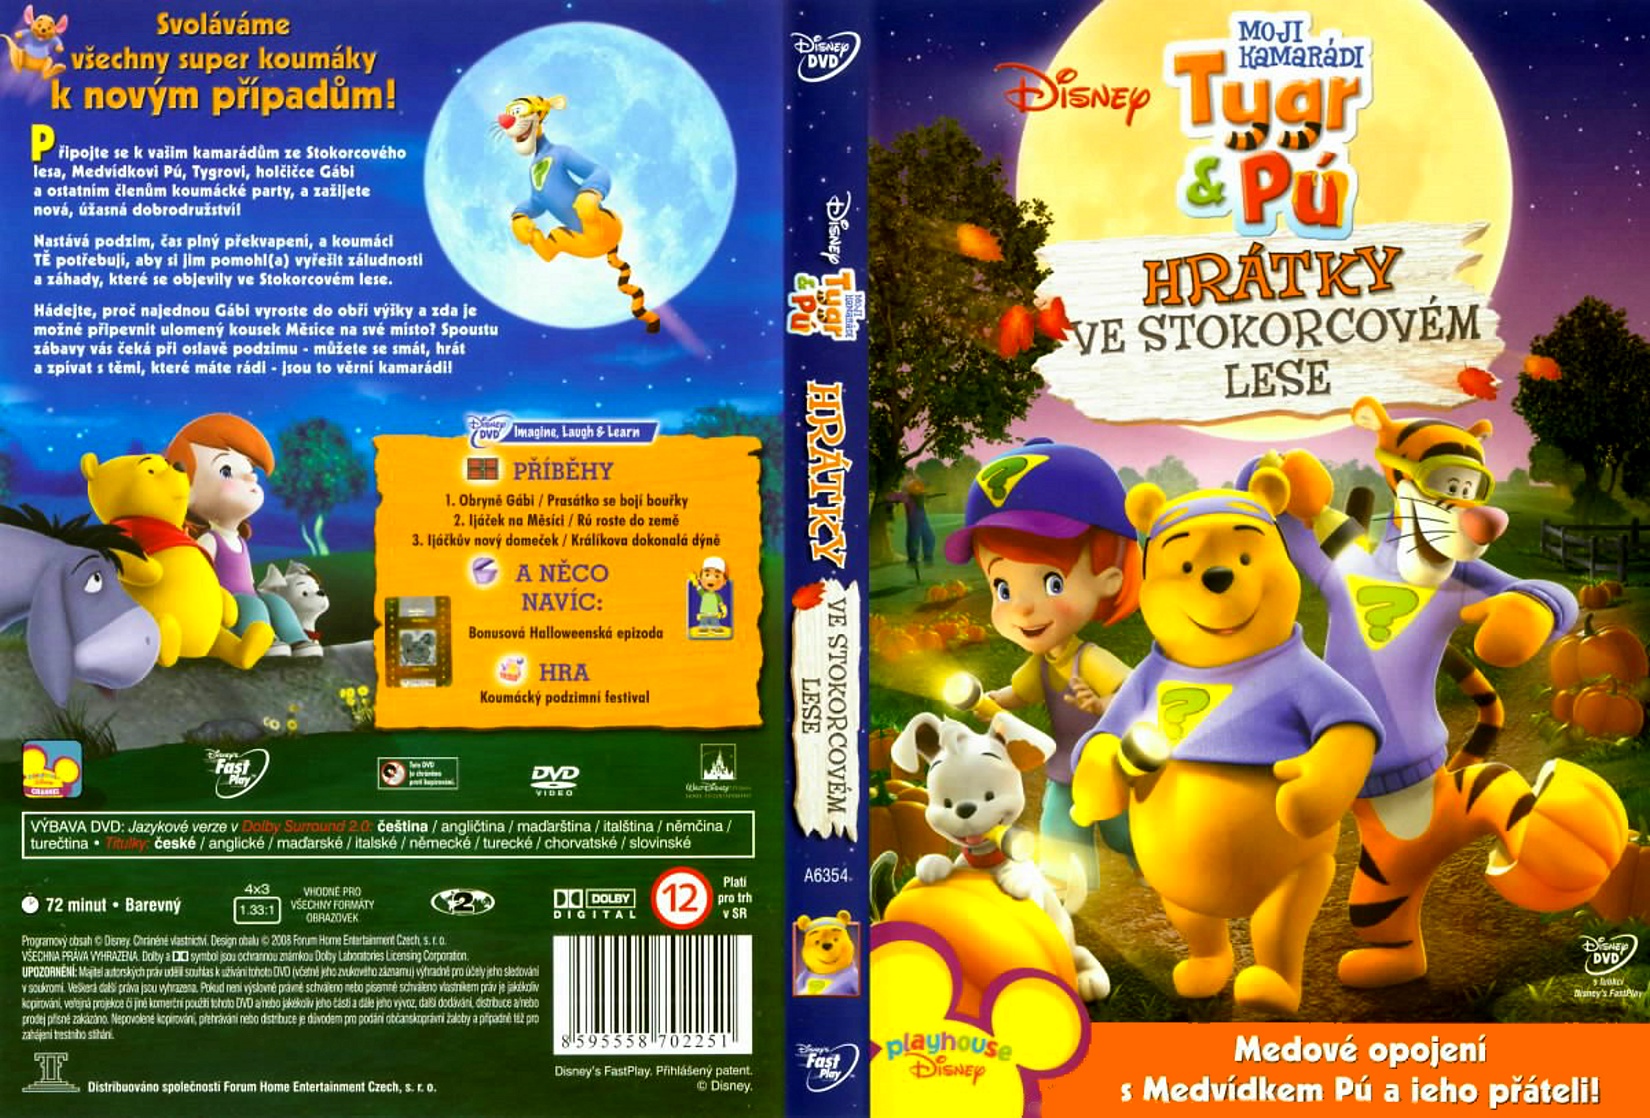 my friends tigger and pooh dvd menu